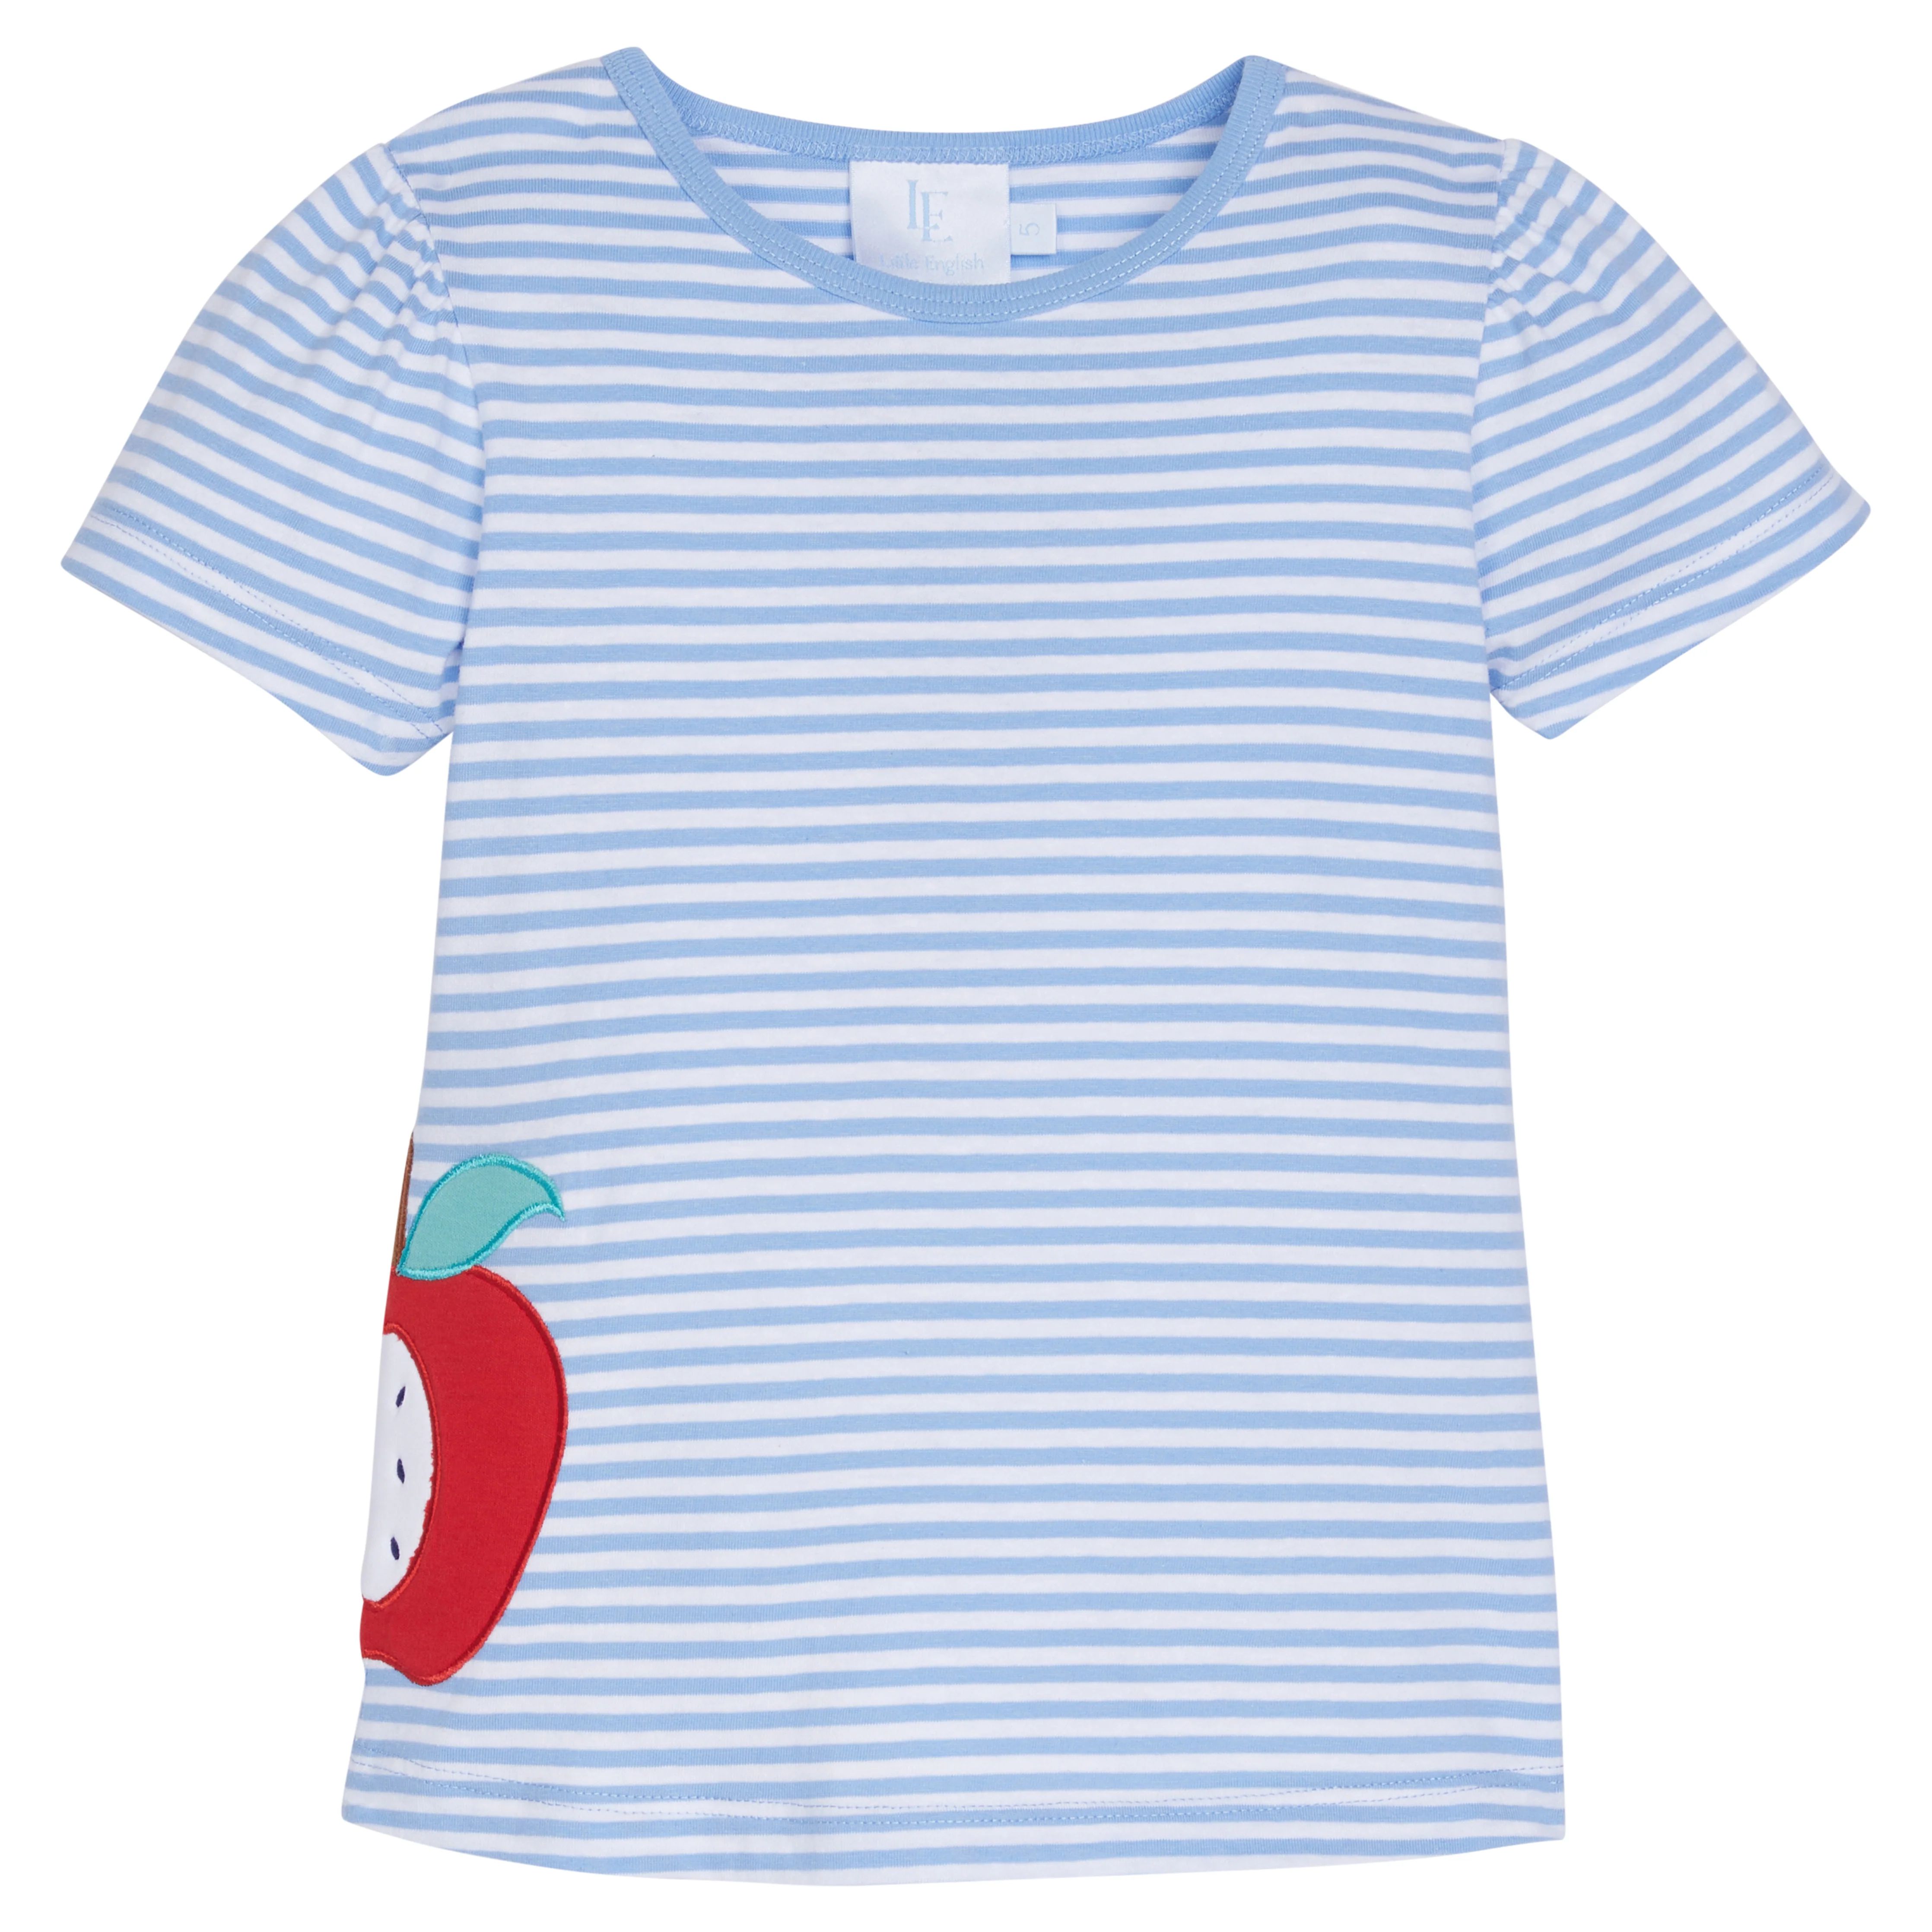 Apple Applique T-Shirt - Back to School Clothes | Little English